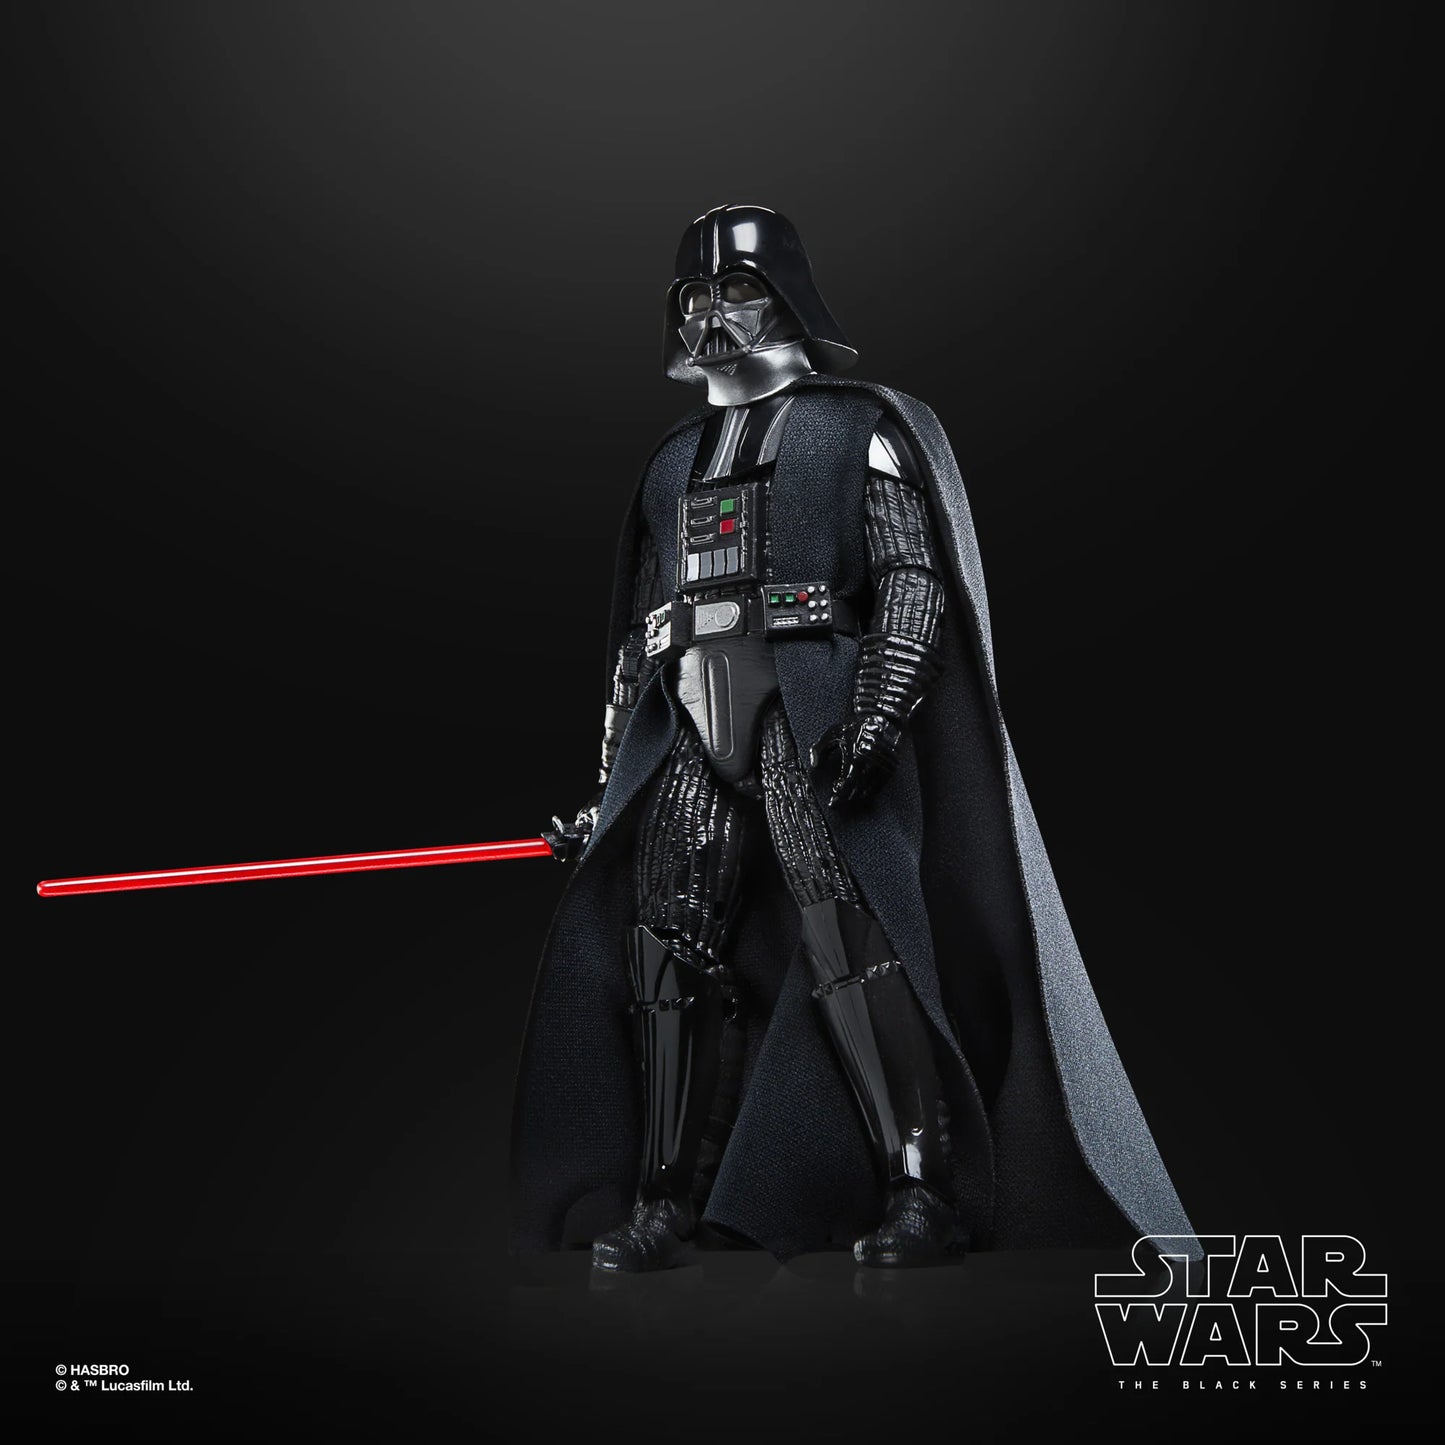 Star Wars The Black Series Darth Vader 6 Inch Action Figure